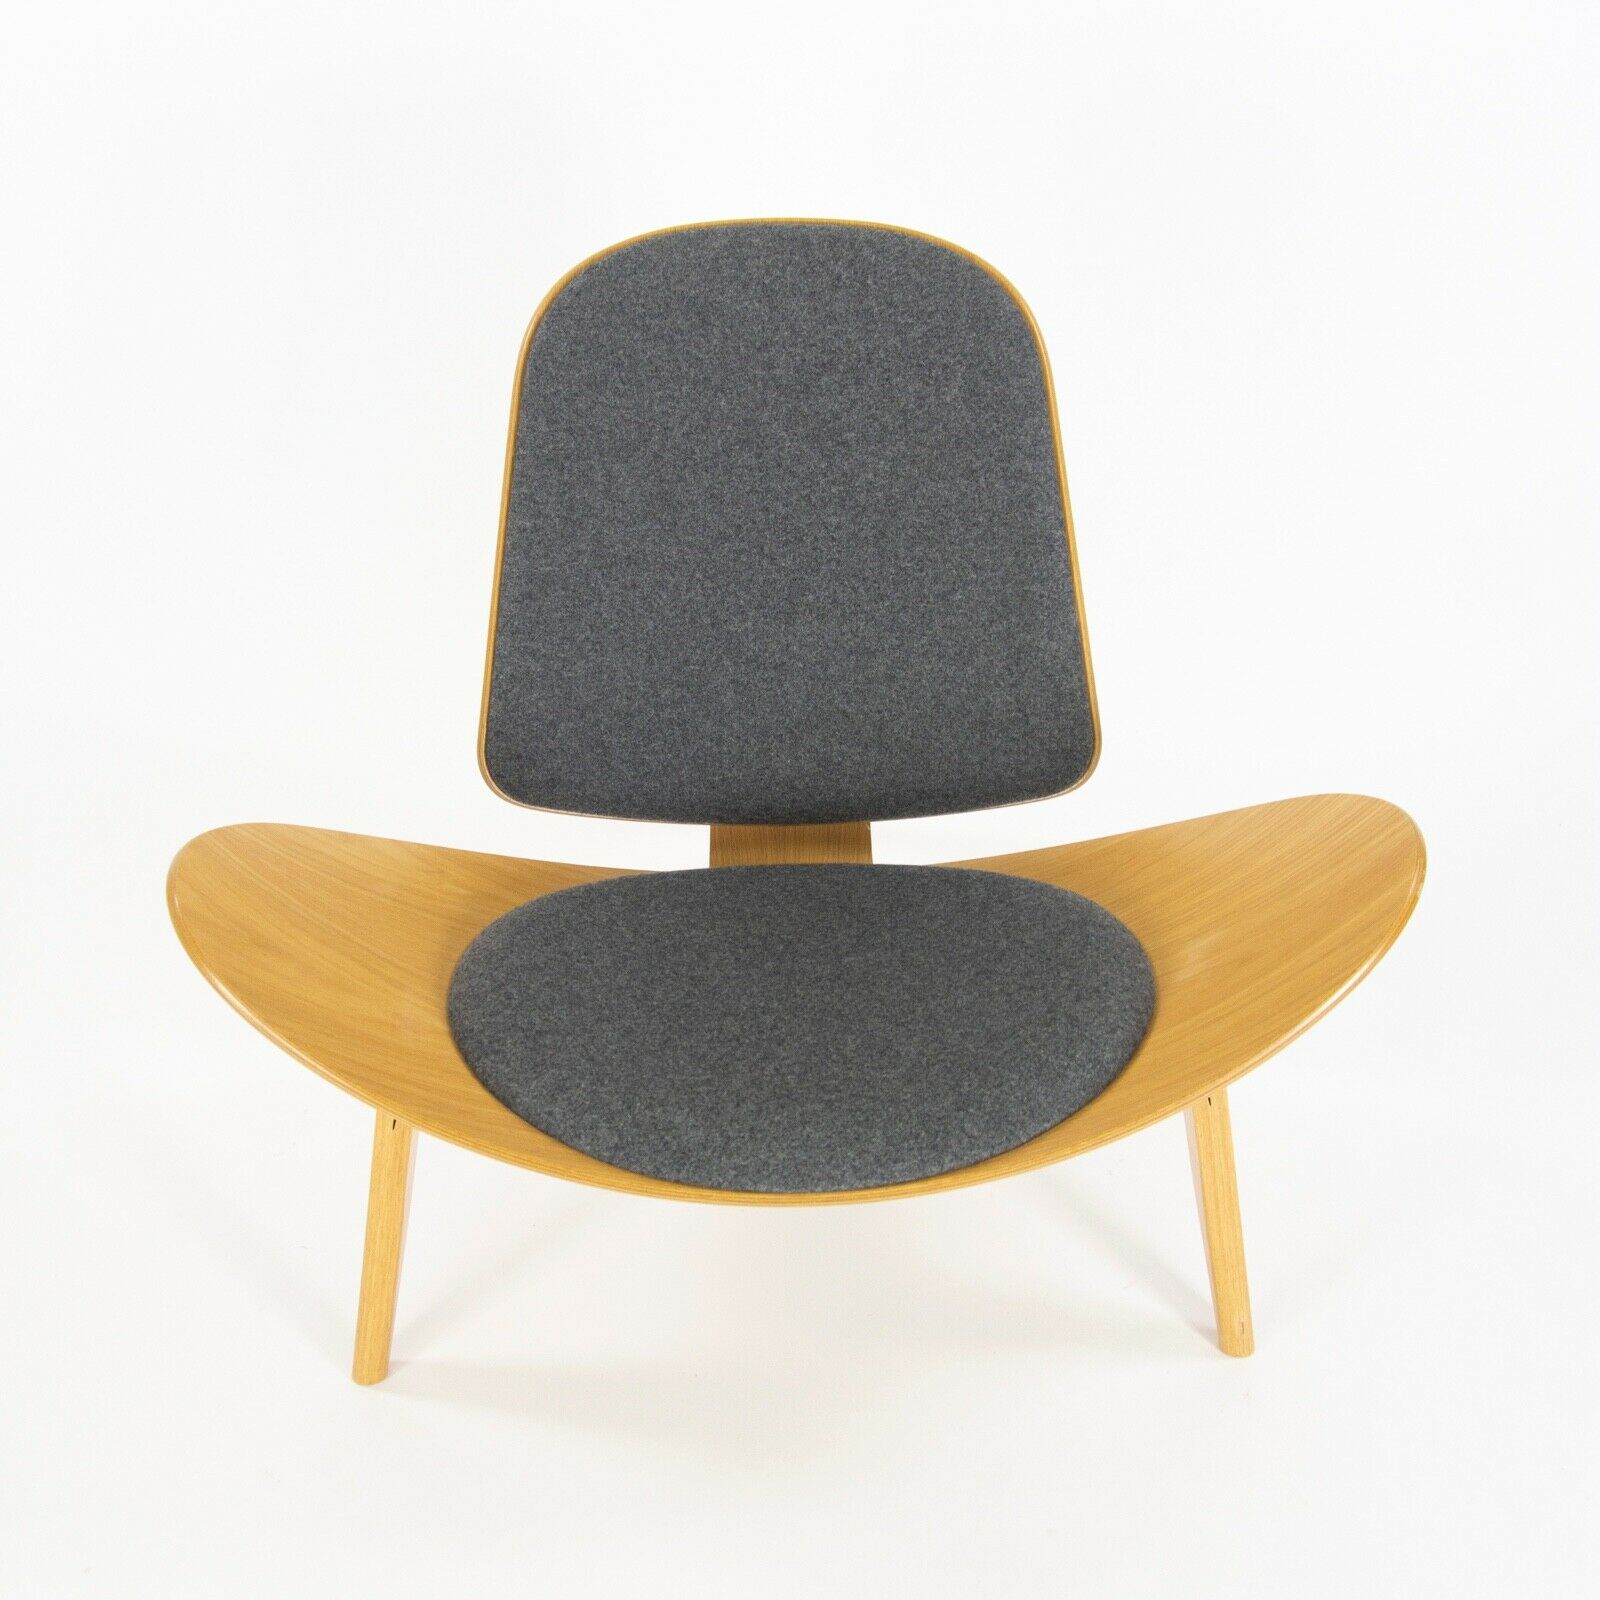 Hans Wegner Carl Hansen Denmark CH07 Shell Lounge Chairs Lacquered Oak 2x Avail